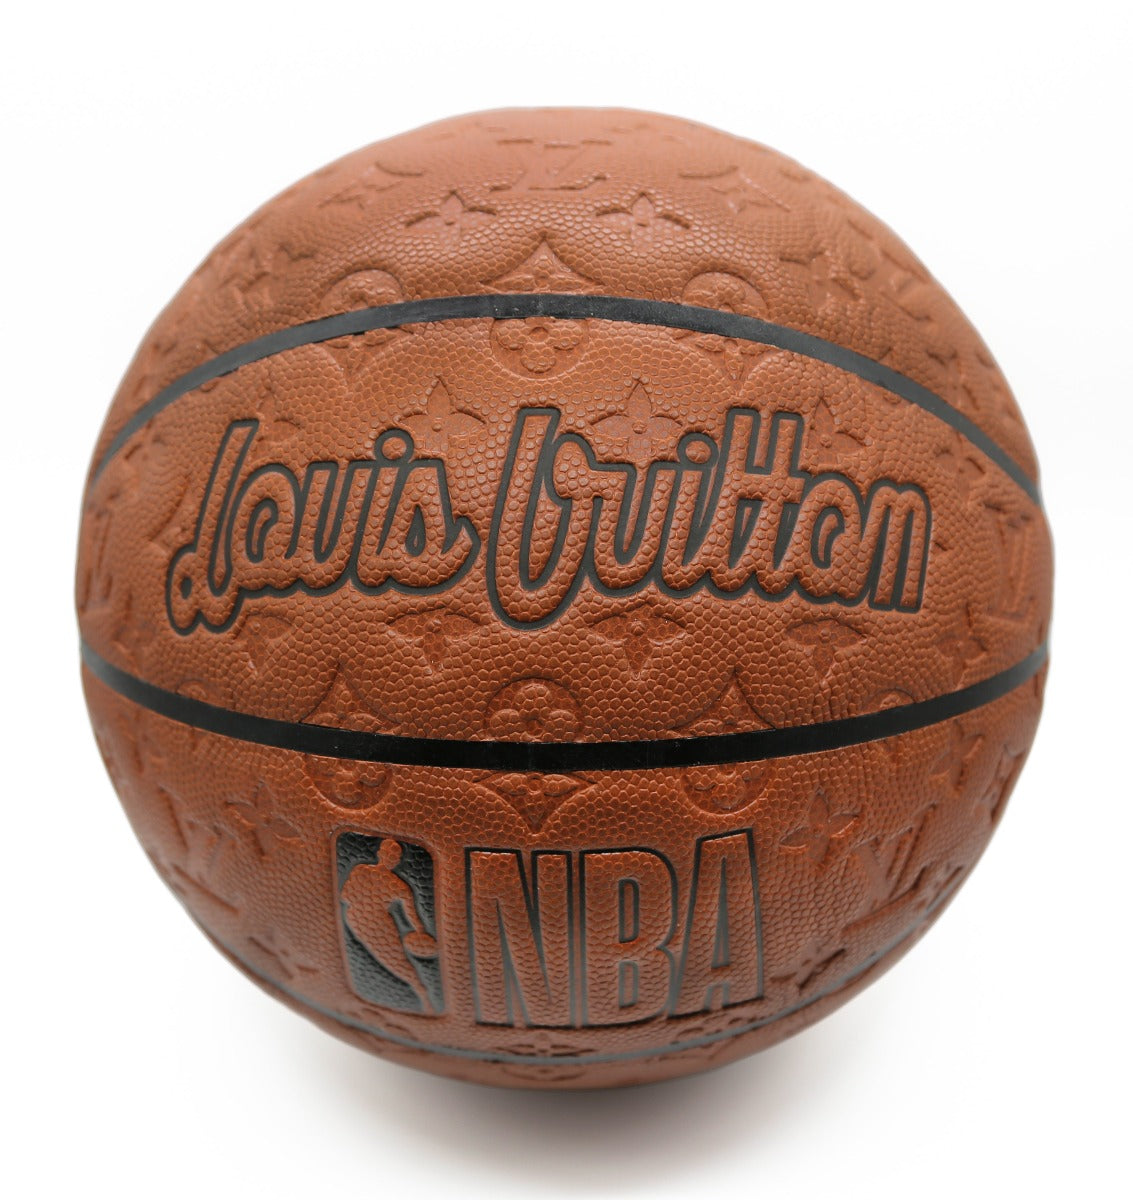 Louis Vuitton presents its third NBA collab